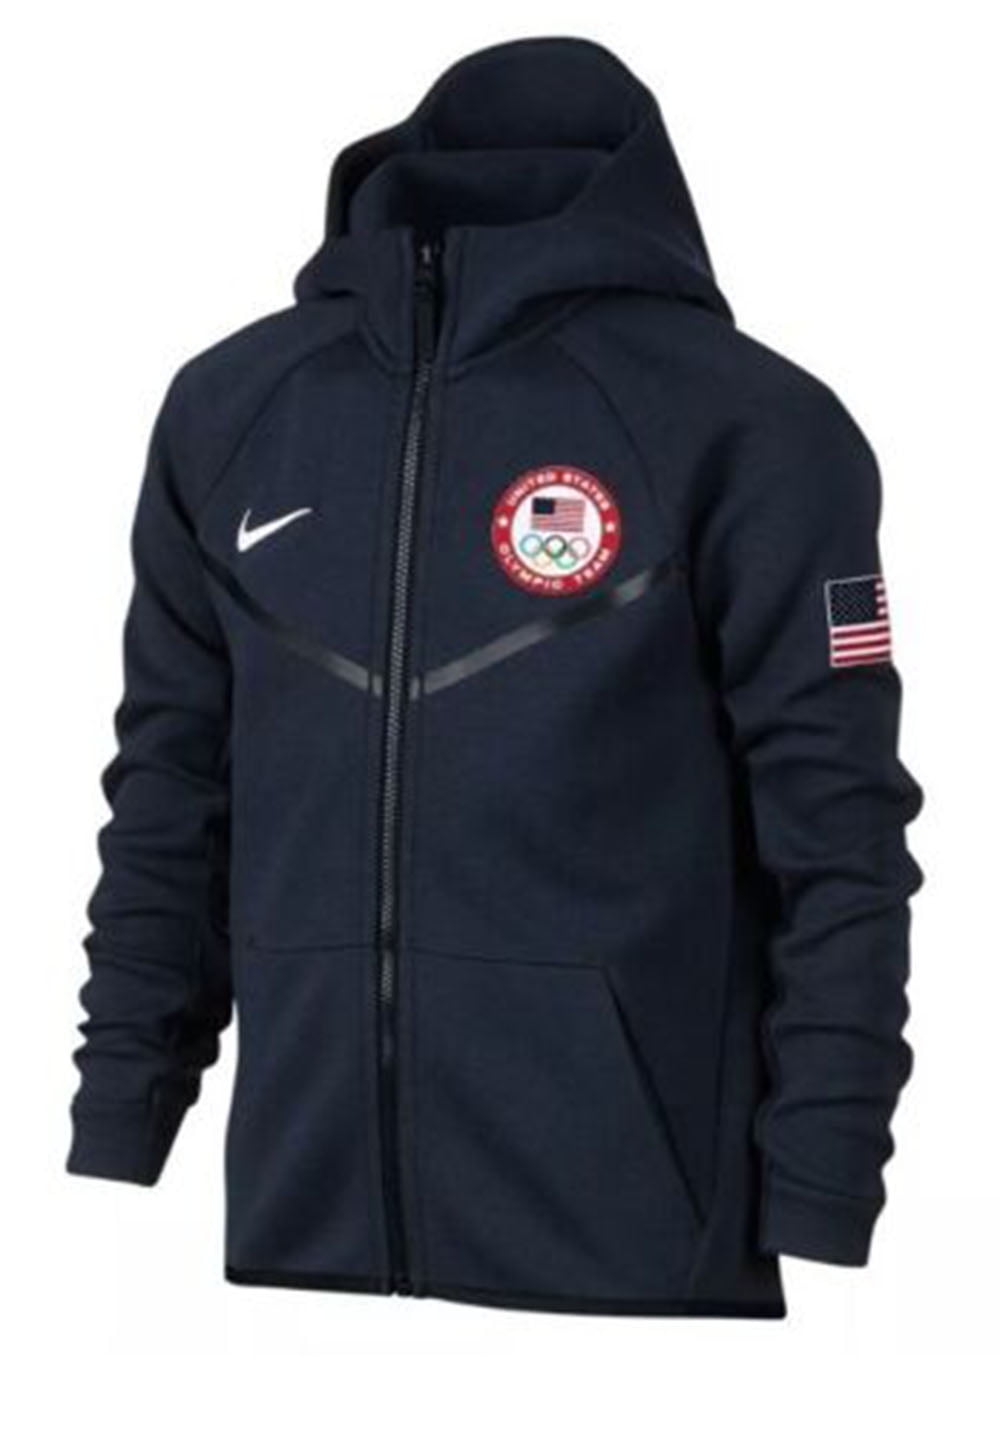 Cambios de Valiente eso es todo Nike Boys Team USA Olympic Zipper Hoodie Navy/White 826816-473 - Walmart.com